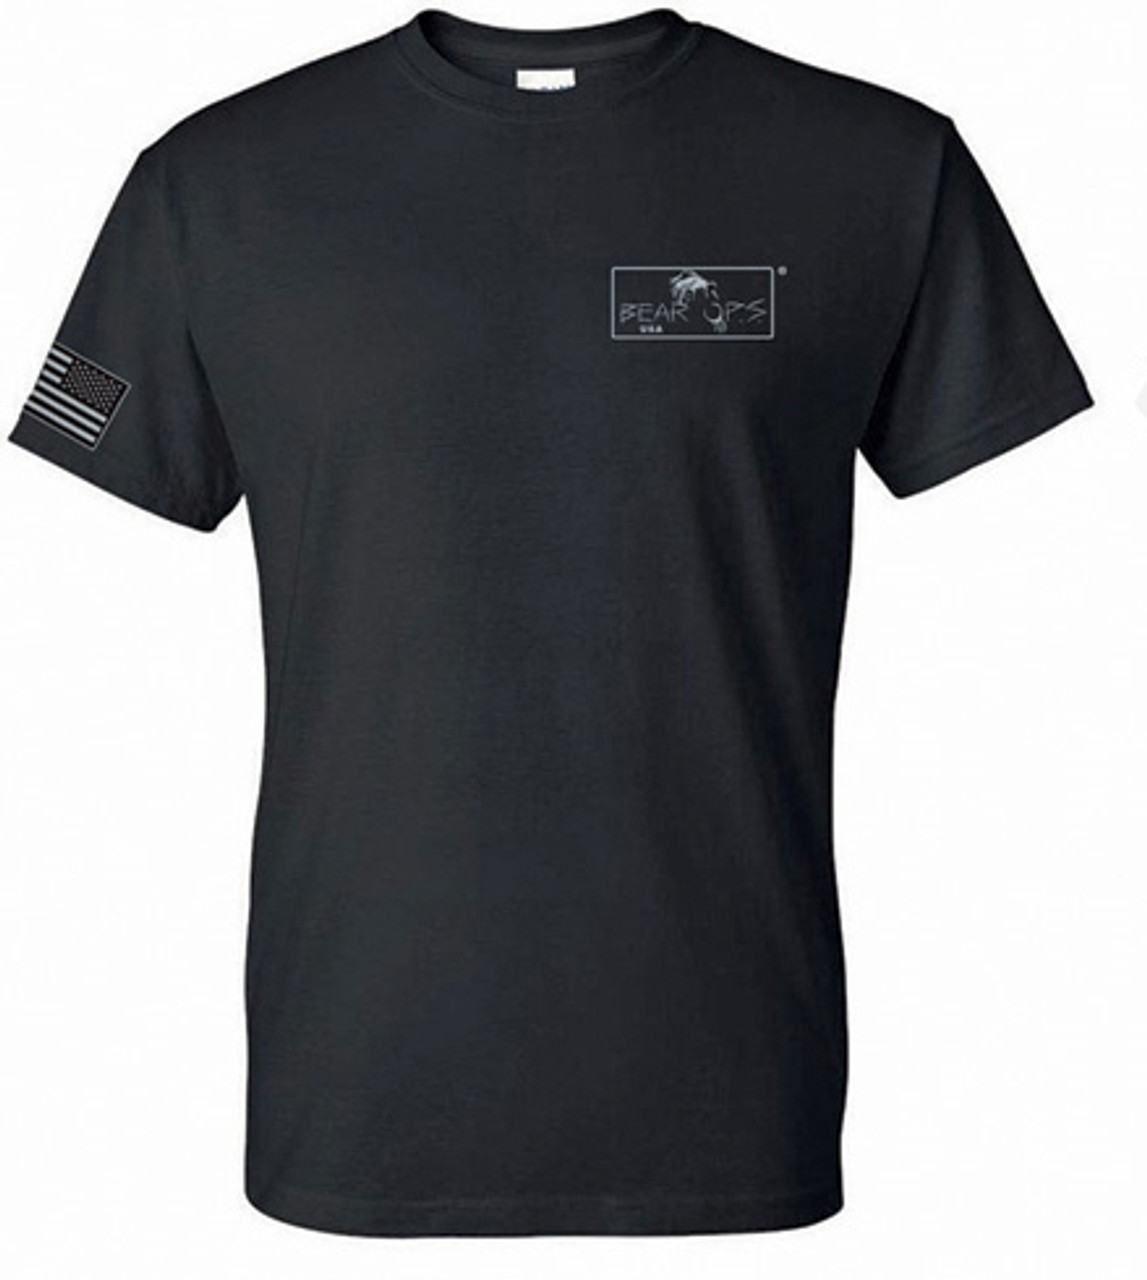 Bear & Son "Spin. Flip. Repeat." Balisong - Black T-Shirt (Medium)